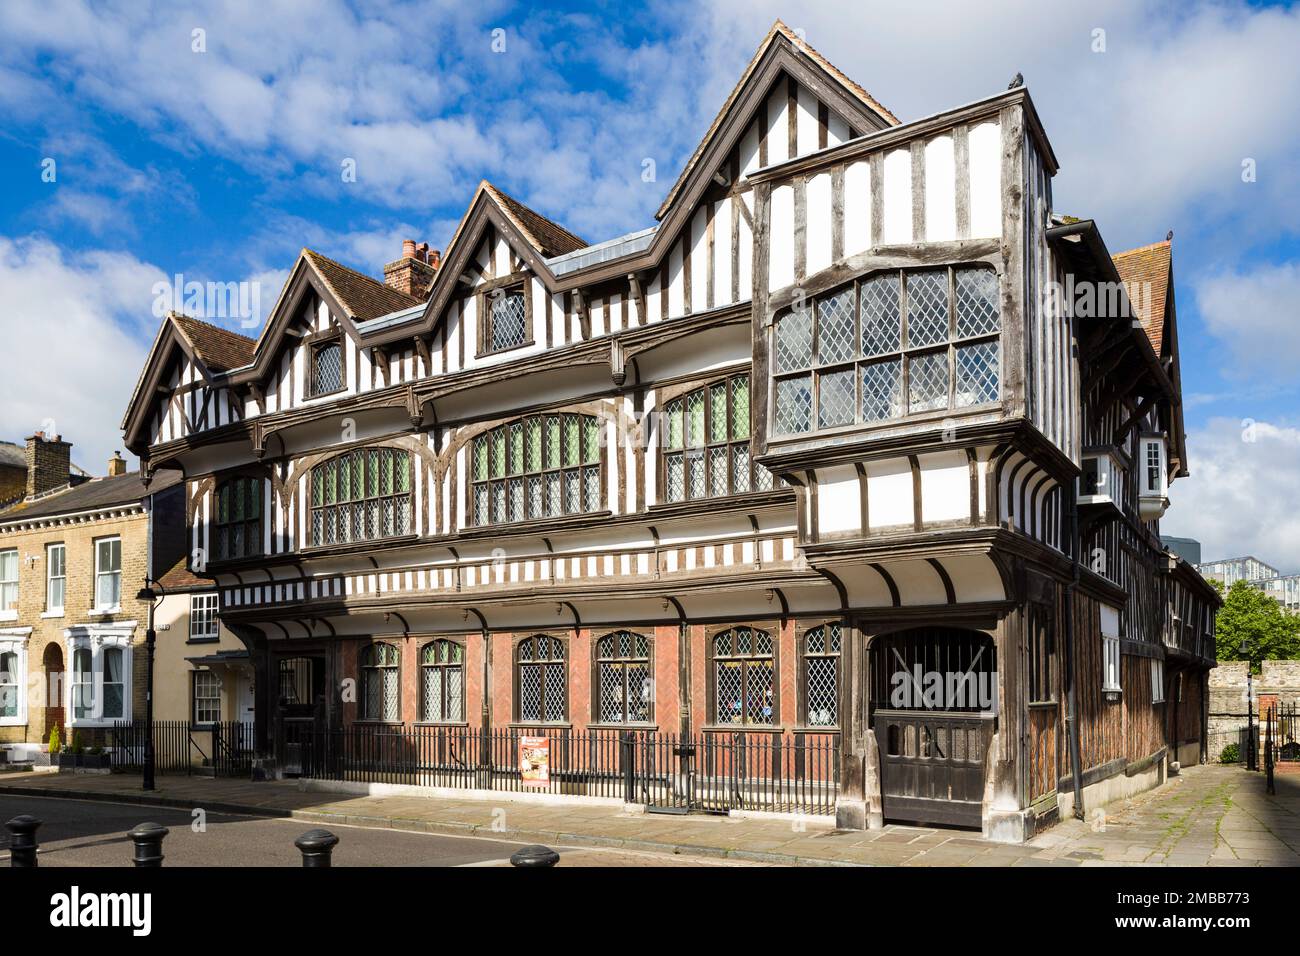 Das Tudor House and Garden Museum, Southampton, ein eindrucksvolles Stadthaus mit Holzrahmen von ca.1500. Stockfoto